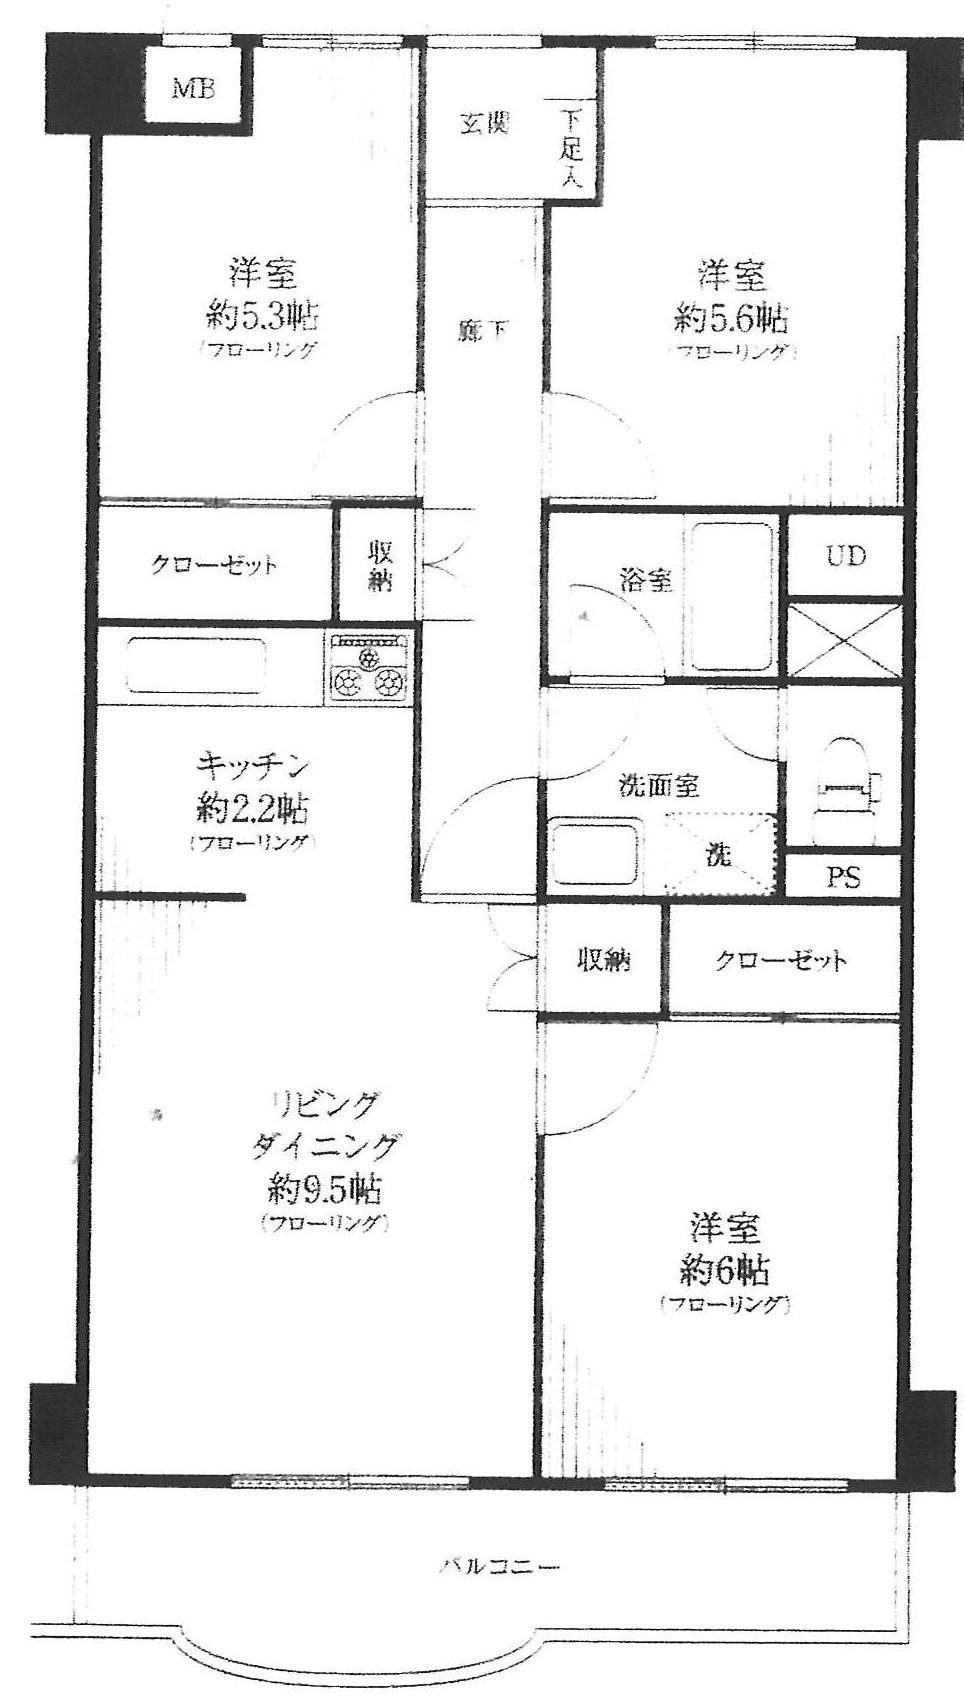 Floor plan. 3LDK, Price 11.8 million yen, Footprint 67.1 sq m , Balcony area 7.69 sq m